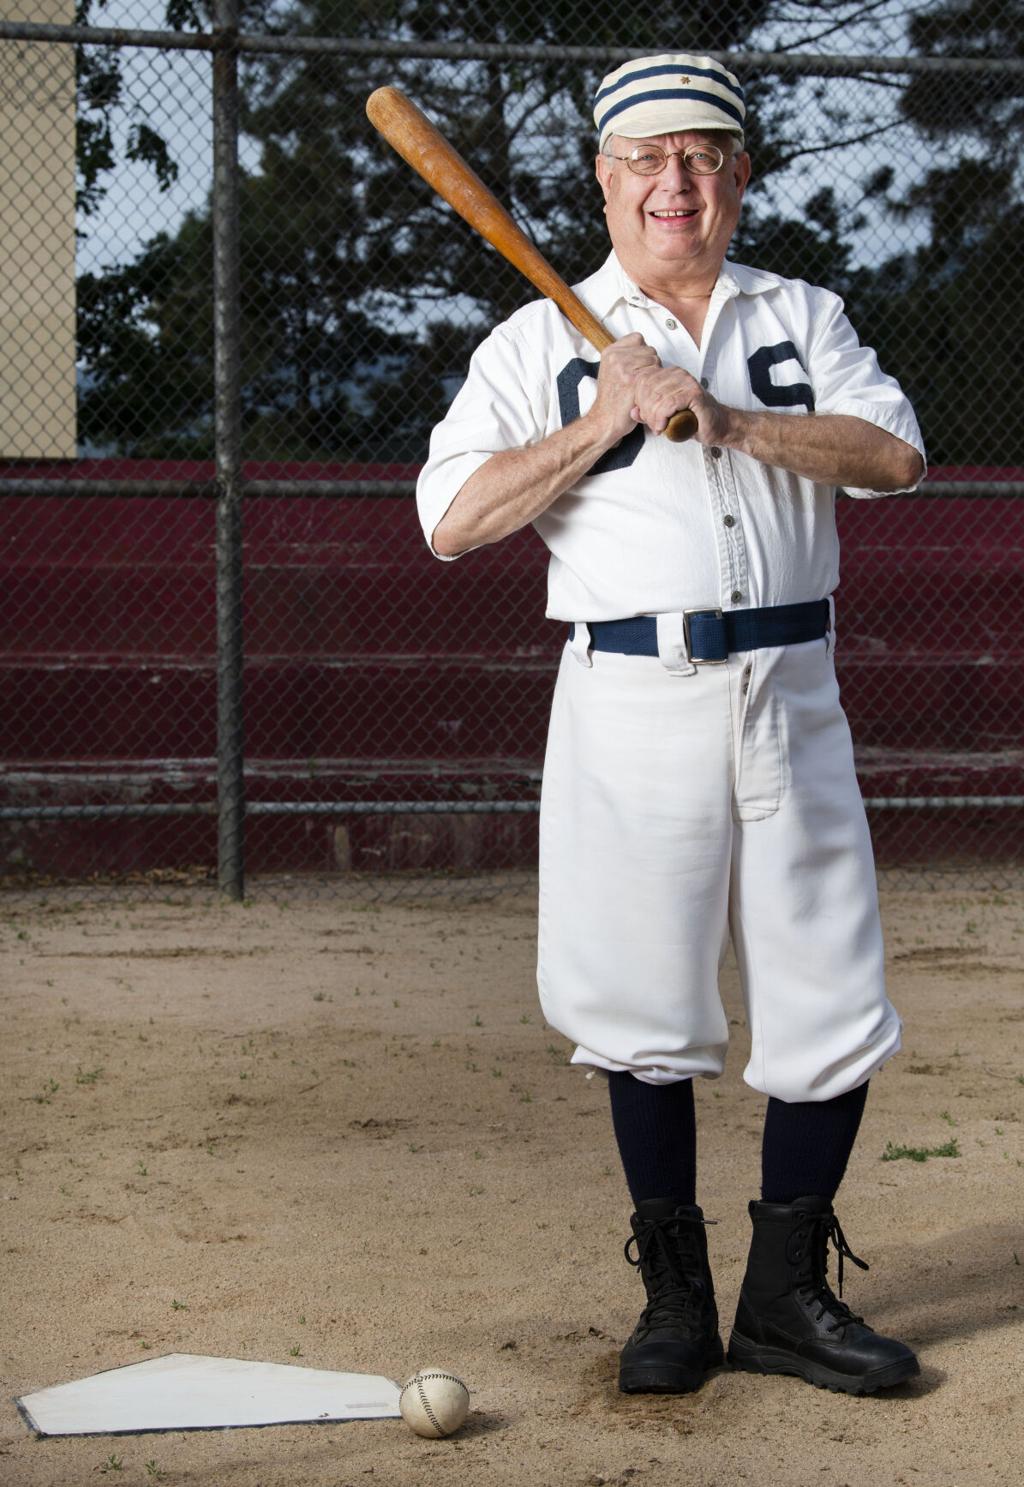 Vintage Baseball Uniform